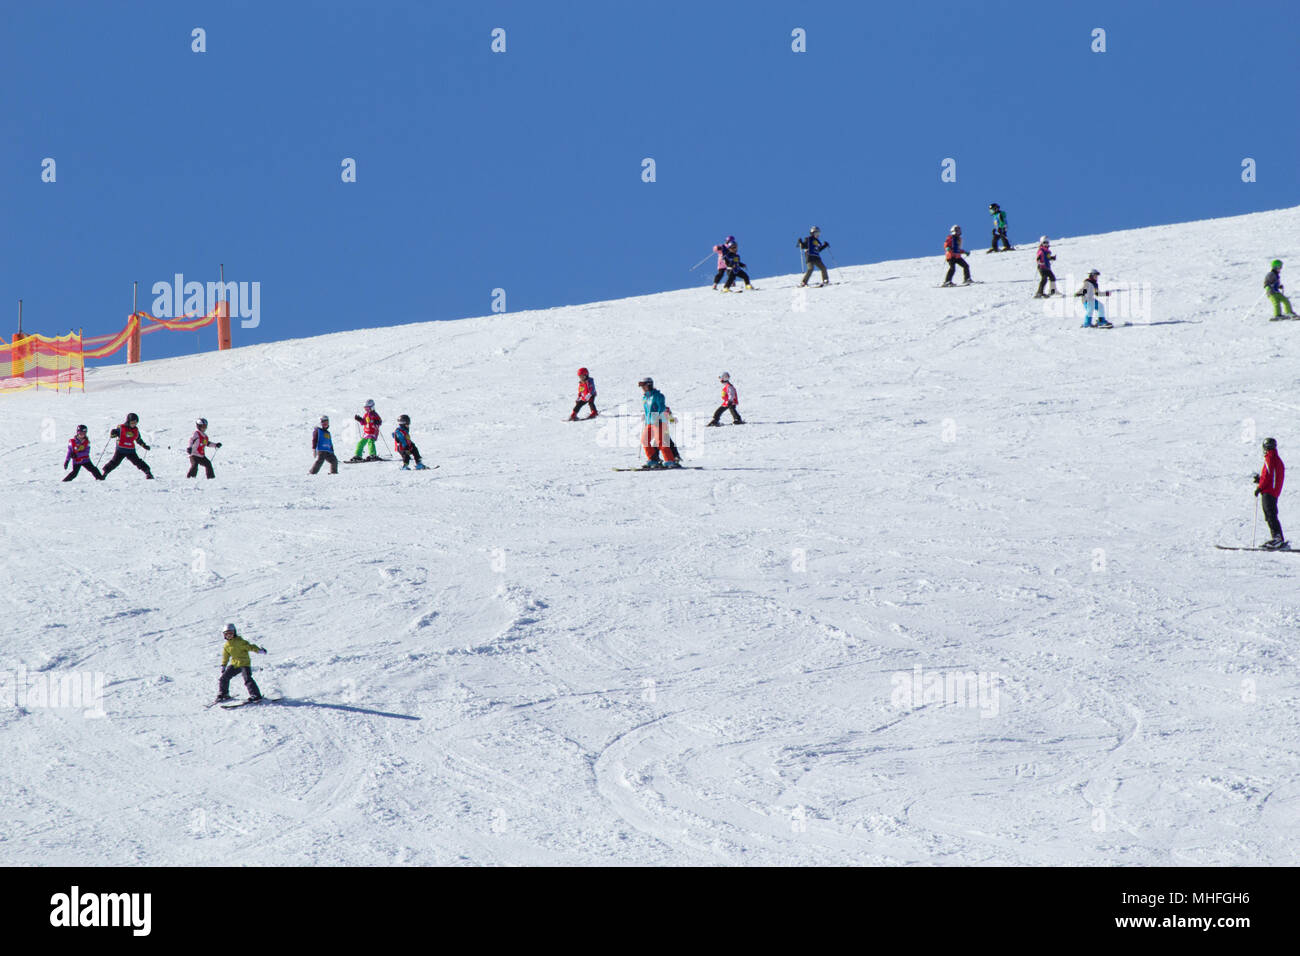 People Skiing In Winter Stock Photo - Alamy